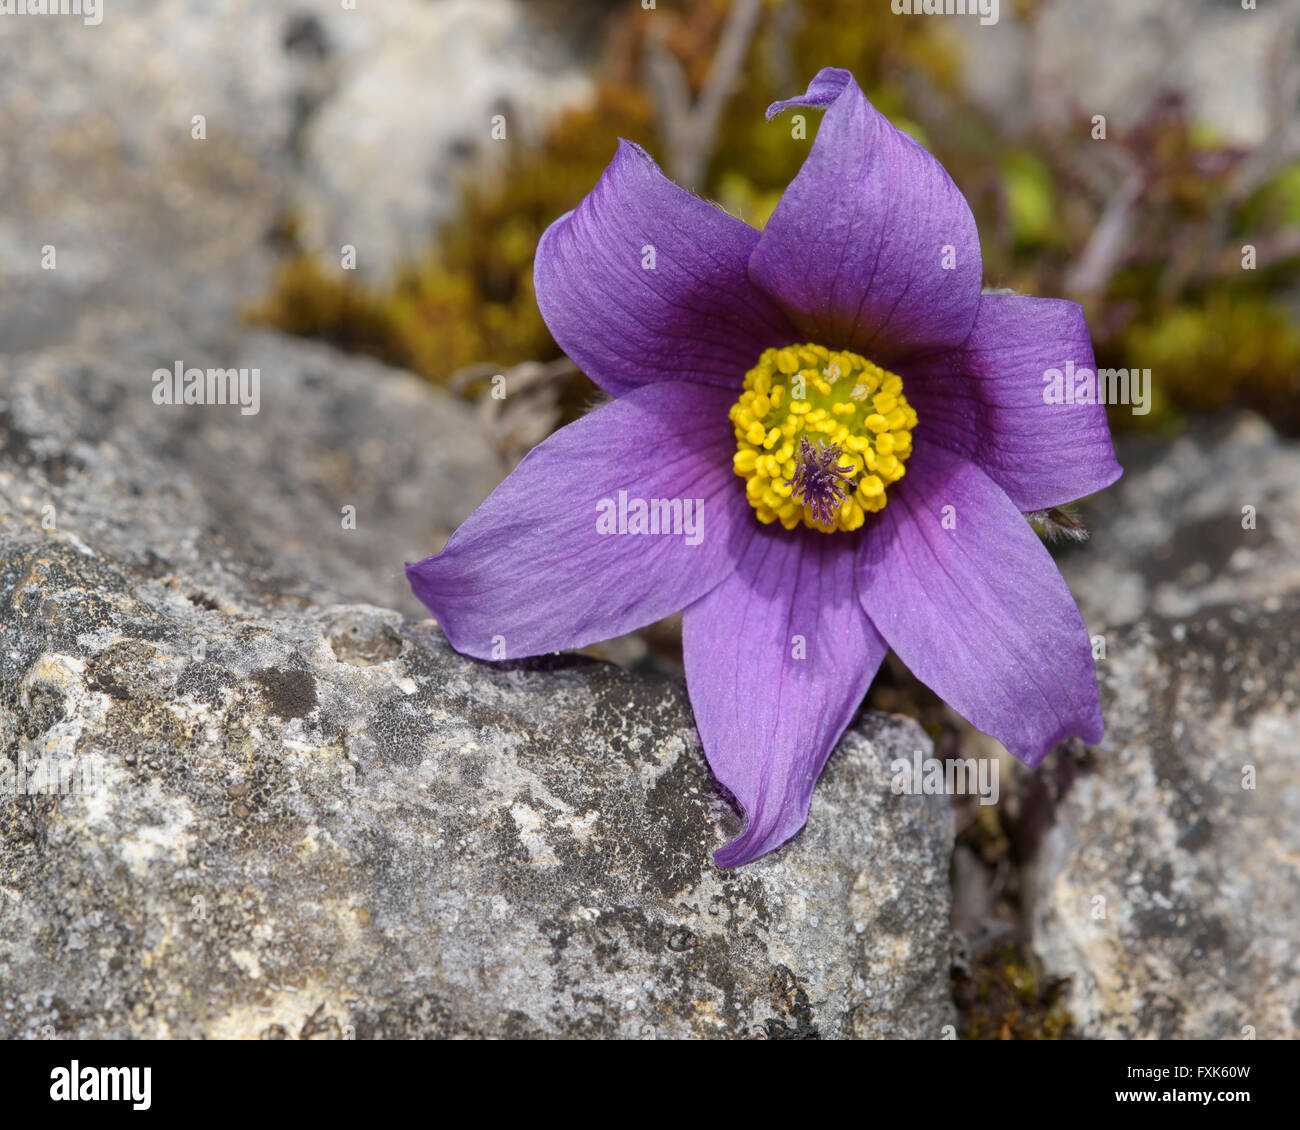 Common pasque flower (pulsatilla vulgaris), single flower in rock, Biosphere Reserve Swabian Alb, Baden-Württemberg, Germany Stock Photo